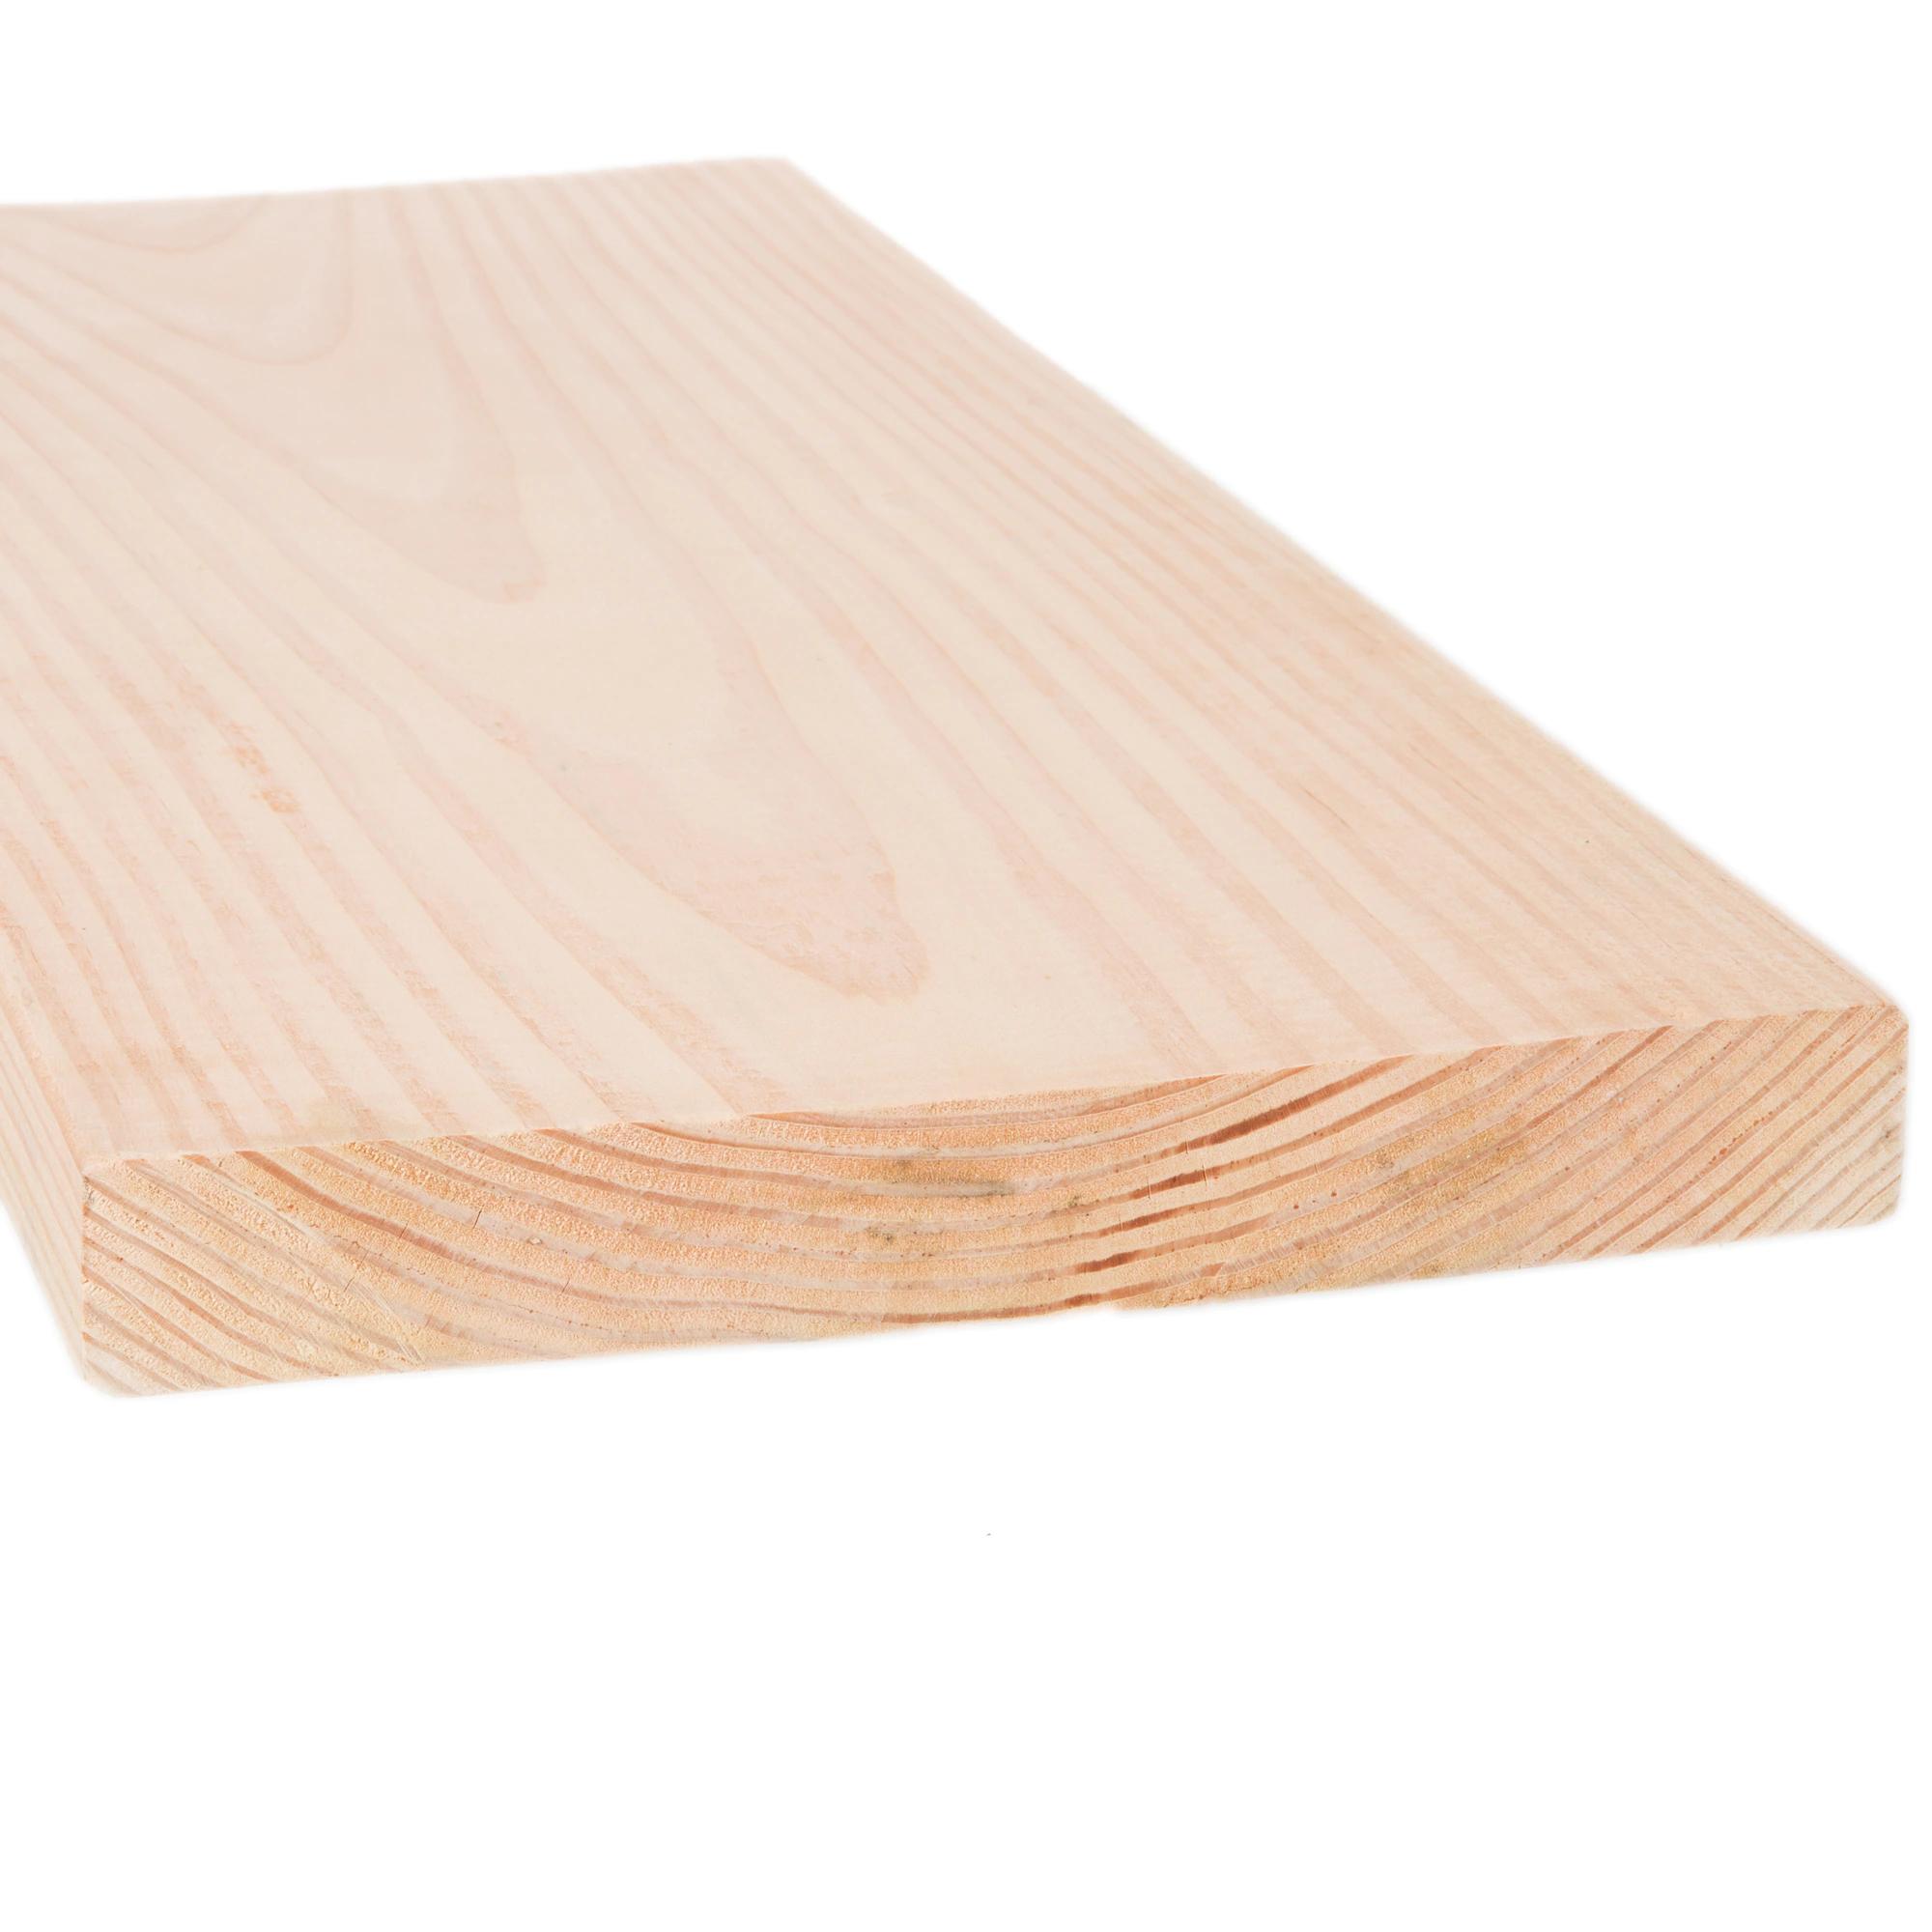 2-in x 4-in x 12-ft Fir Kiln-dried Lumber in the Dimensional